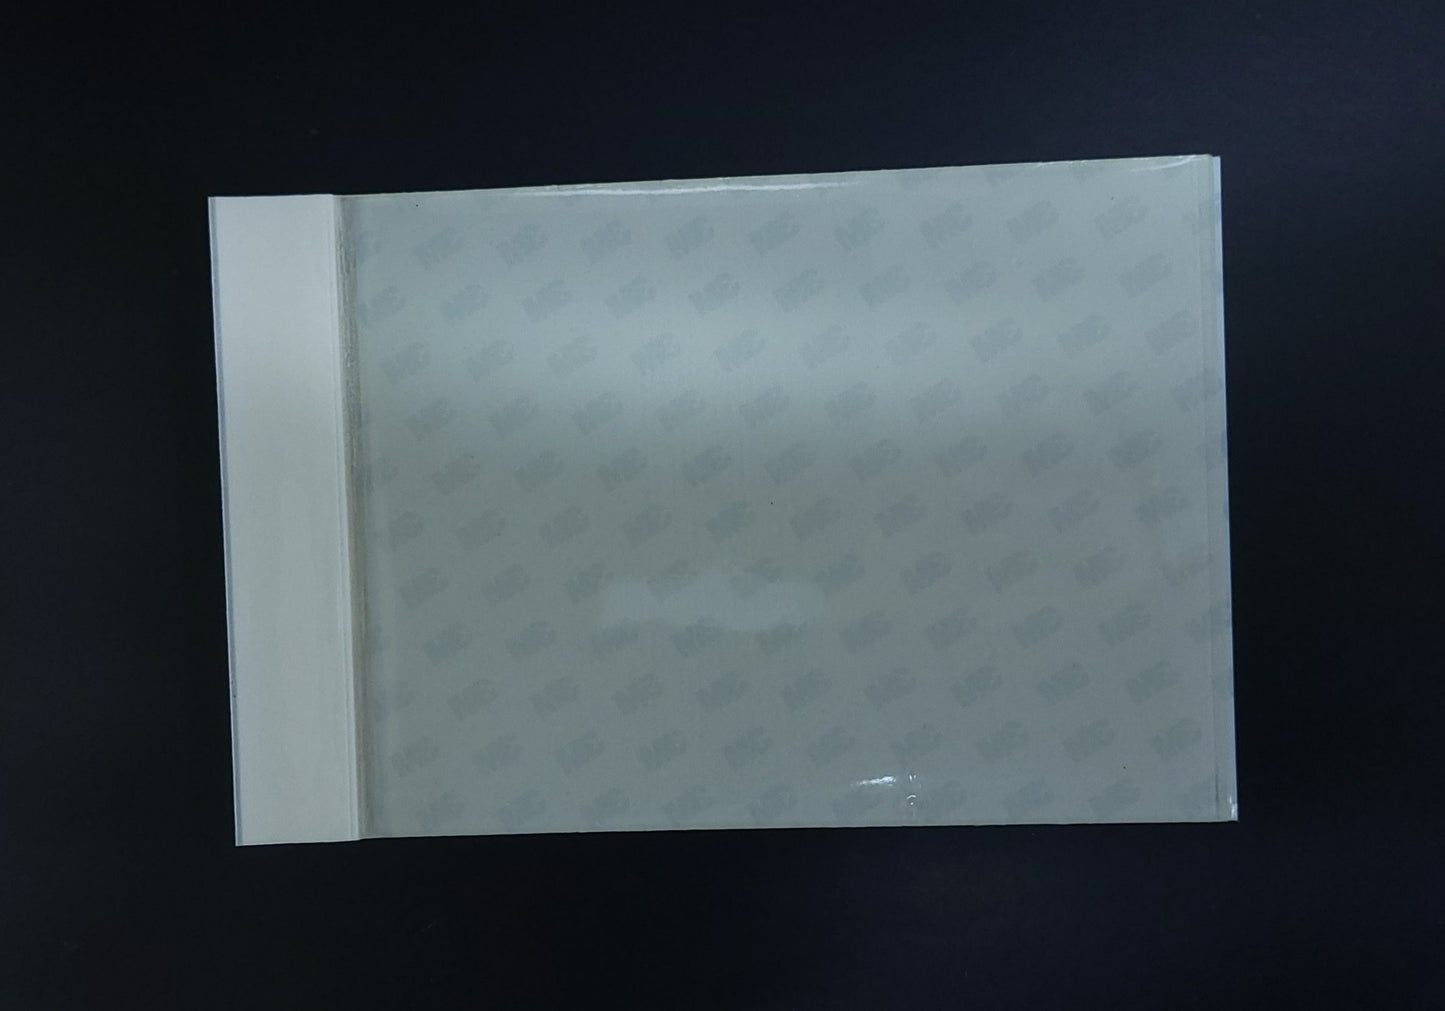 DNA Free Latent Lift Tape Pad (25 Sheets per Pad)